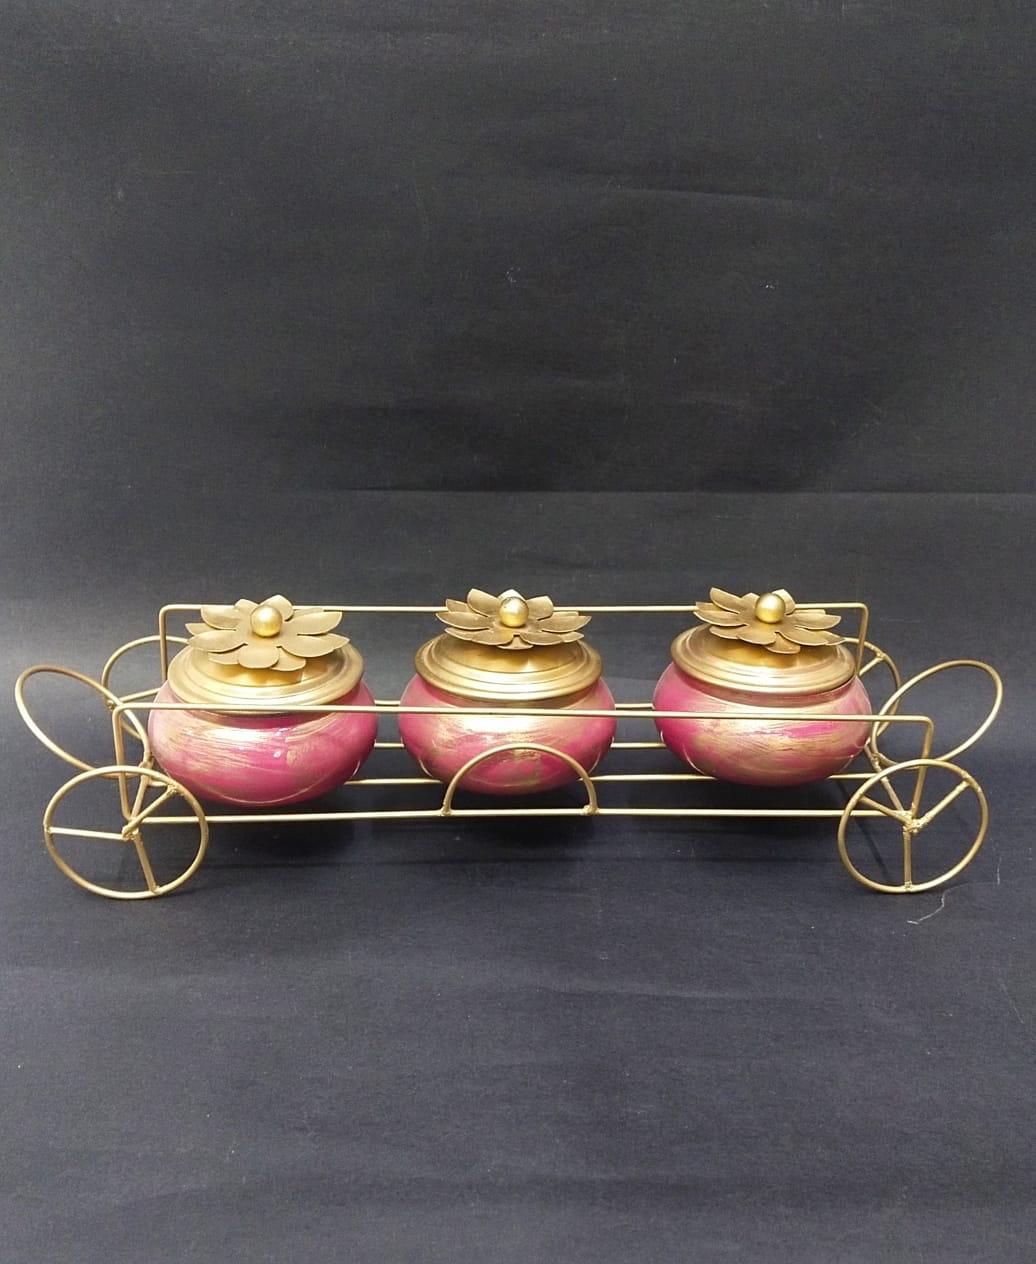 Trolley Style Storage Jars In Golden & Pink Finish Metallic Make By Tamrapatra